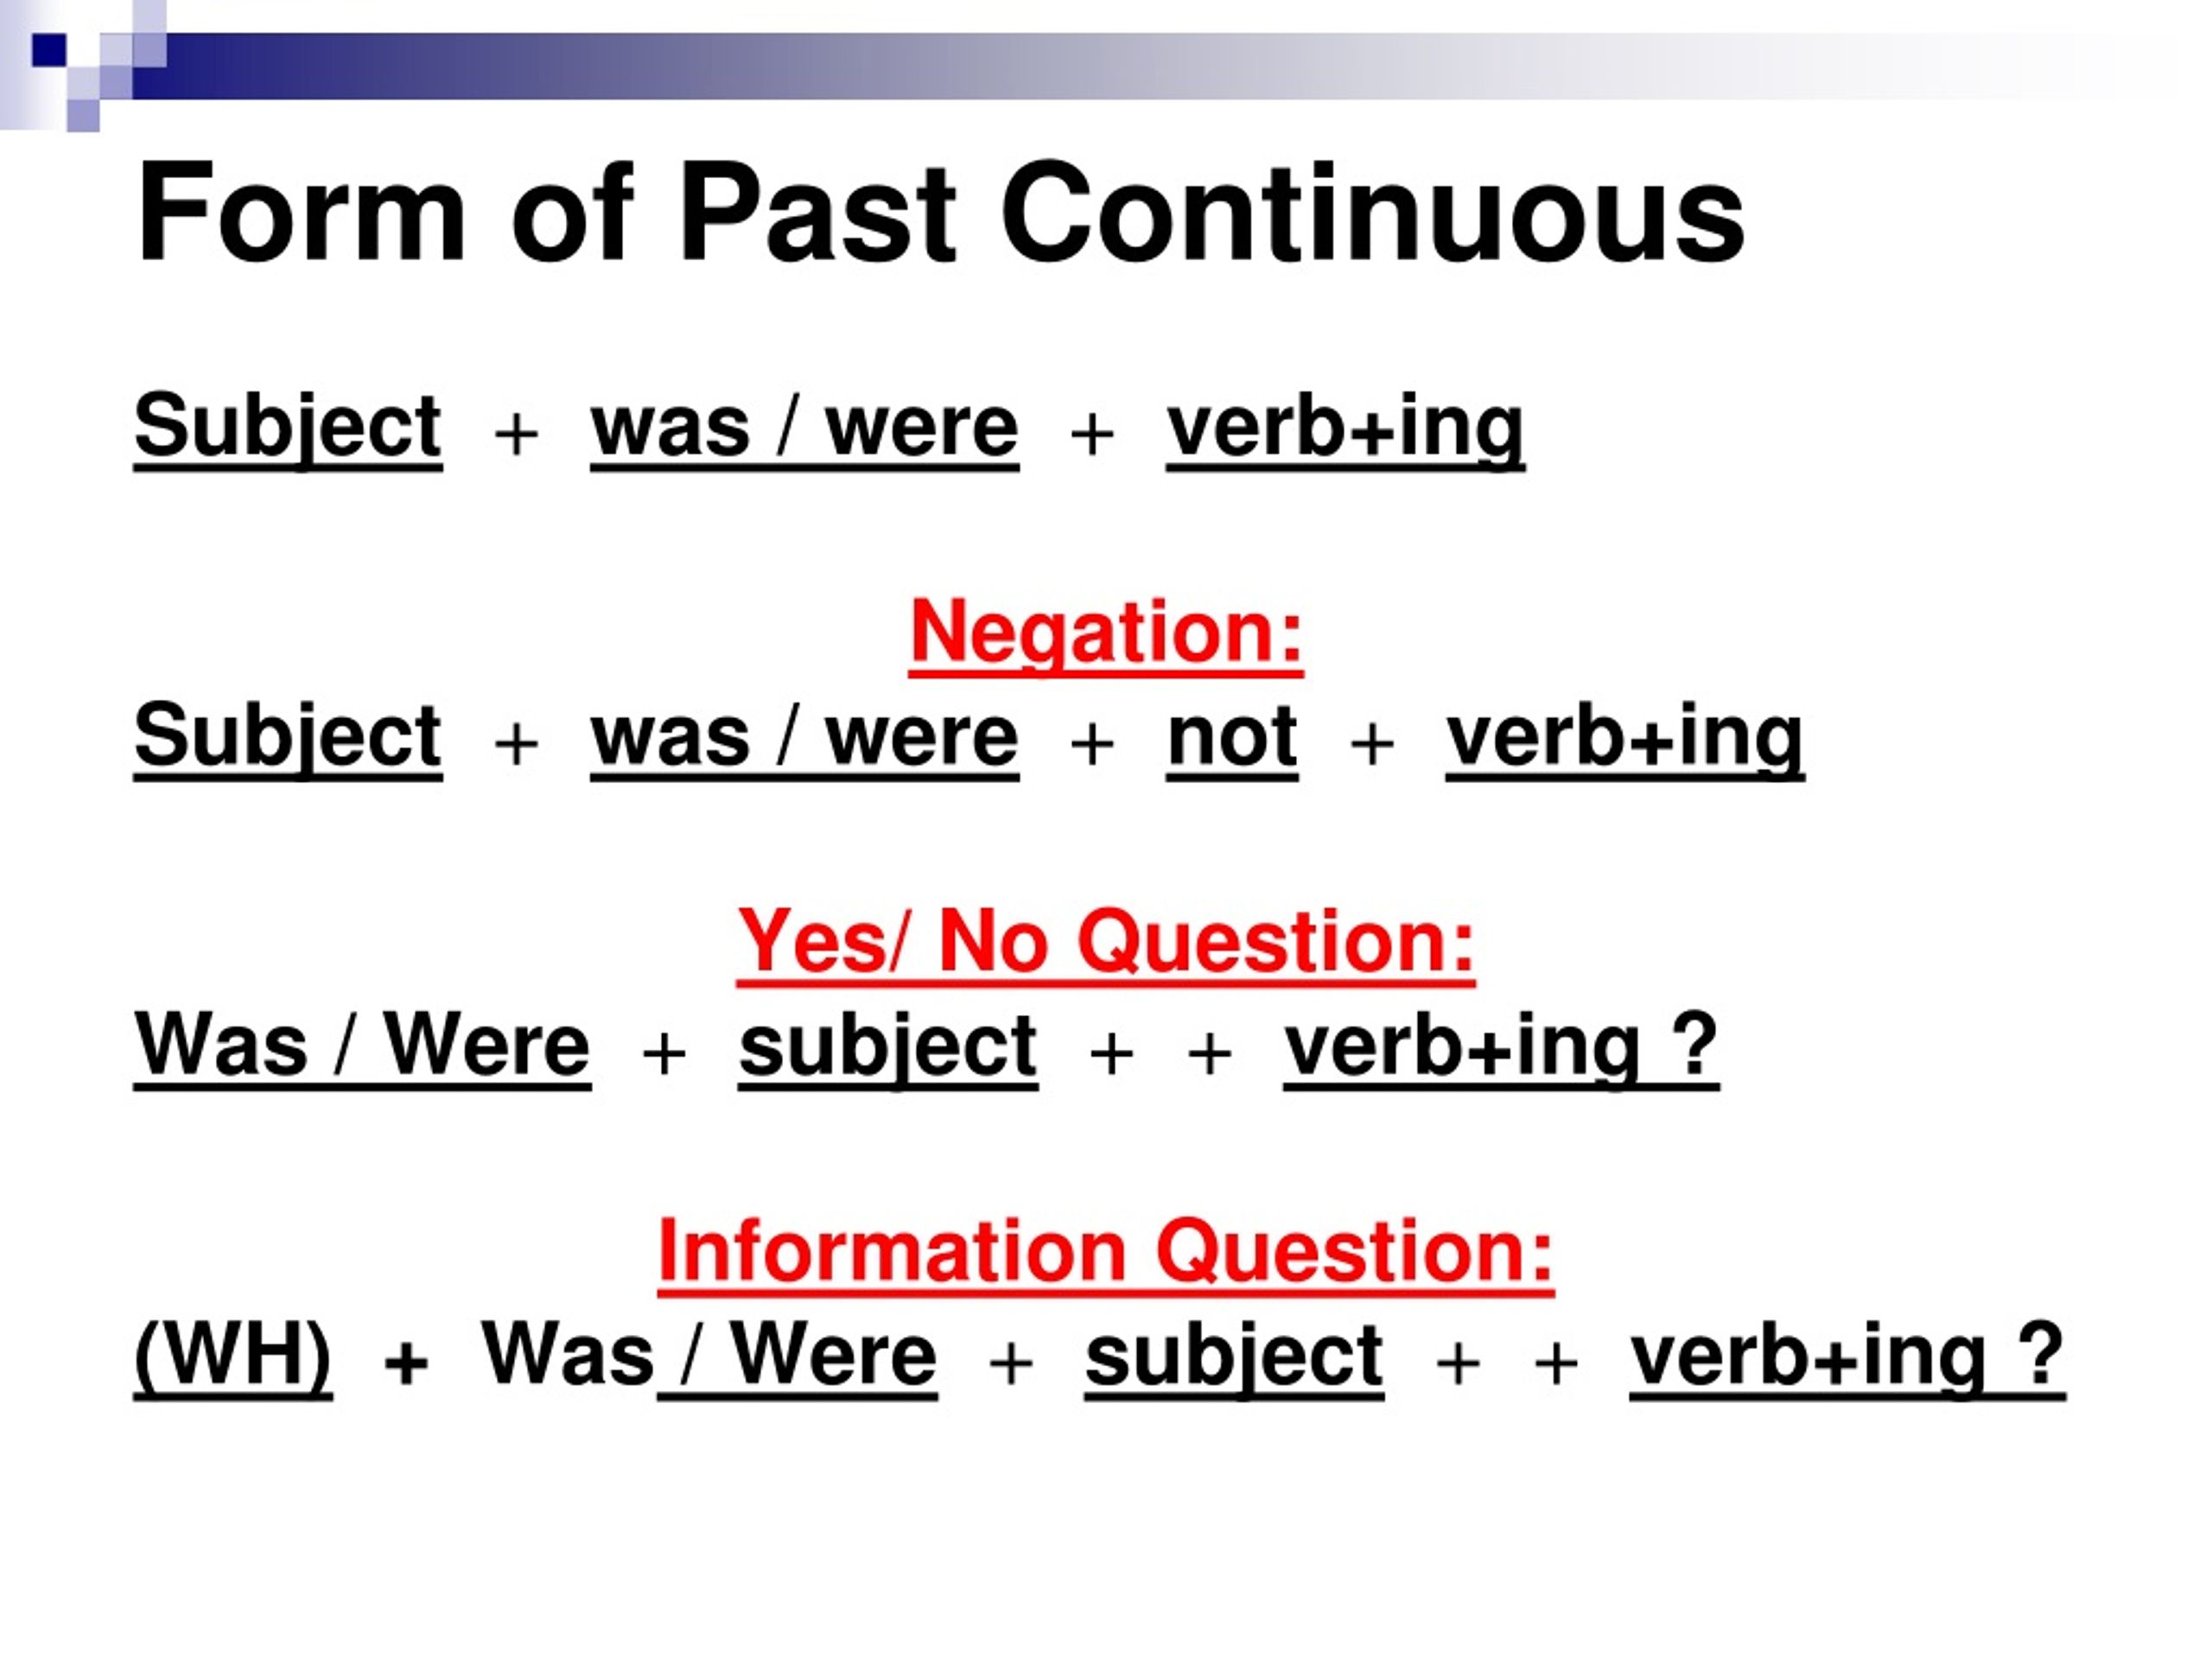 Паст континиус перевод. Схема времени past Continuous. Past Continuous was were ing. Past Continuous вопросительная форма. Глаголы в английском языке past Continuous.